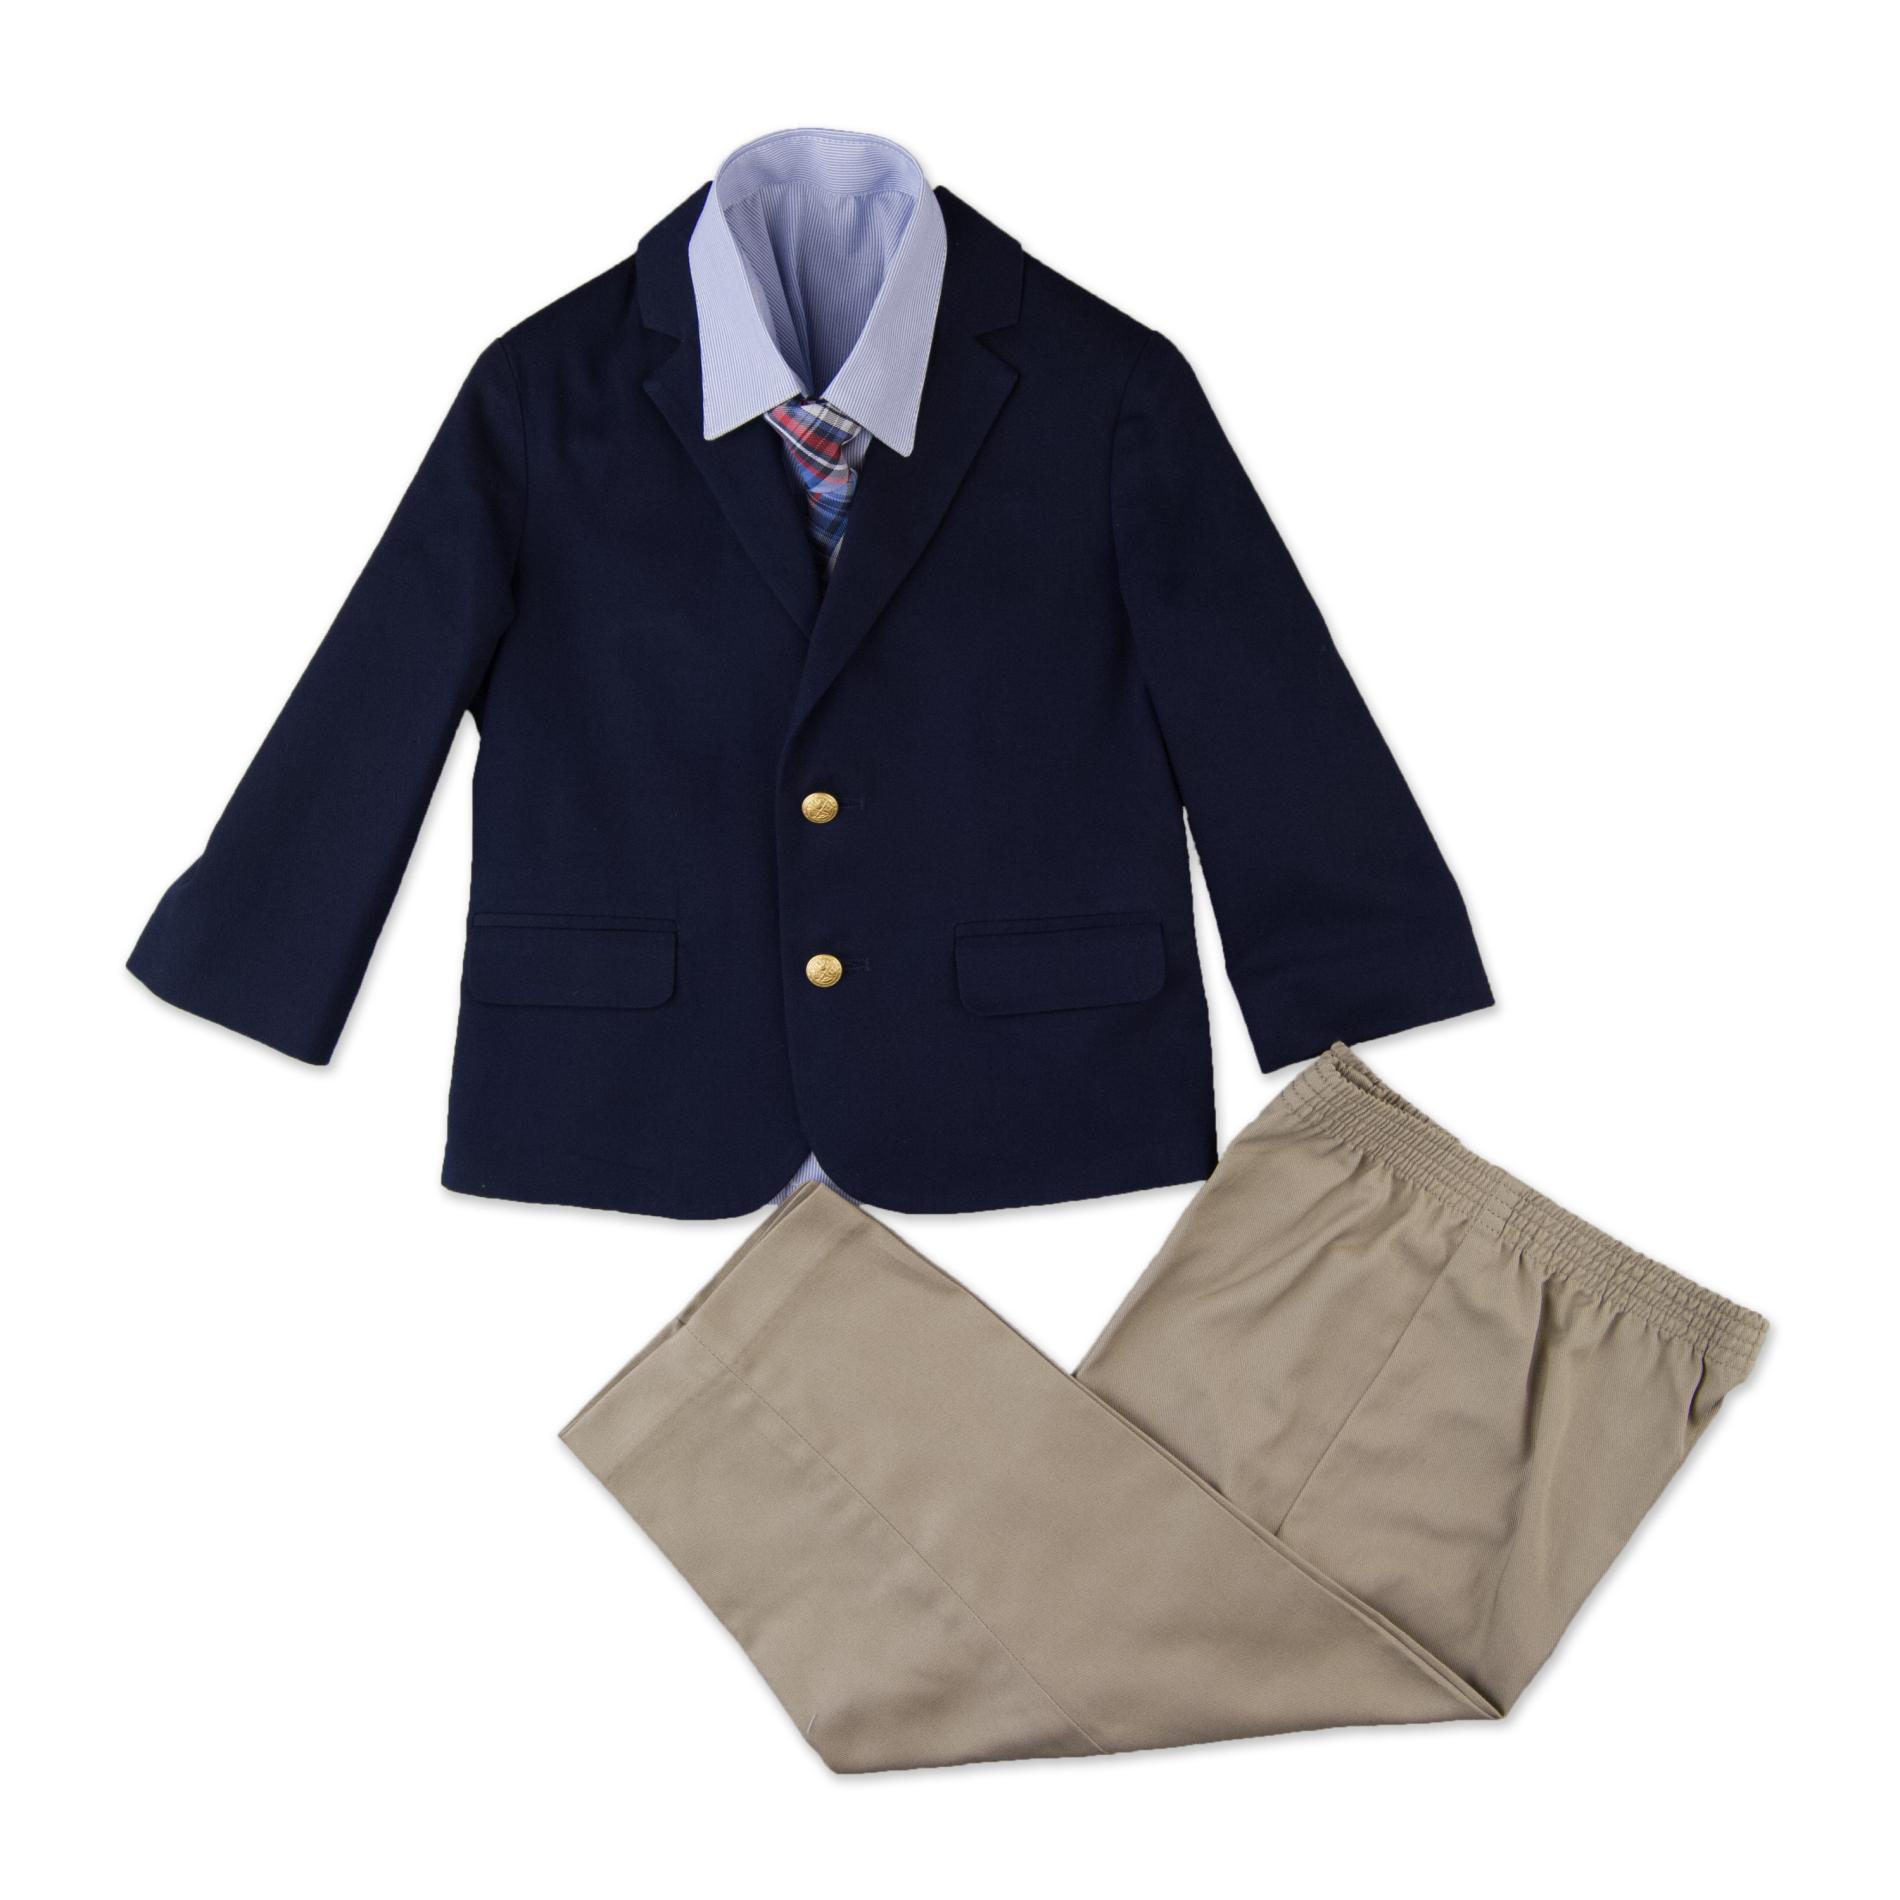 Dockers Infant & Toddler Boy's Suit Jacket  Pants  Shirt & Necktie